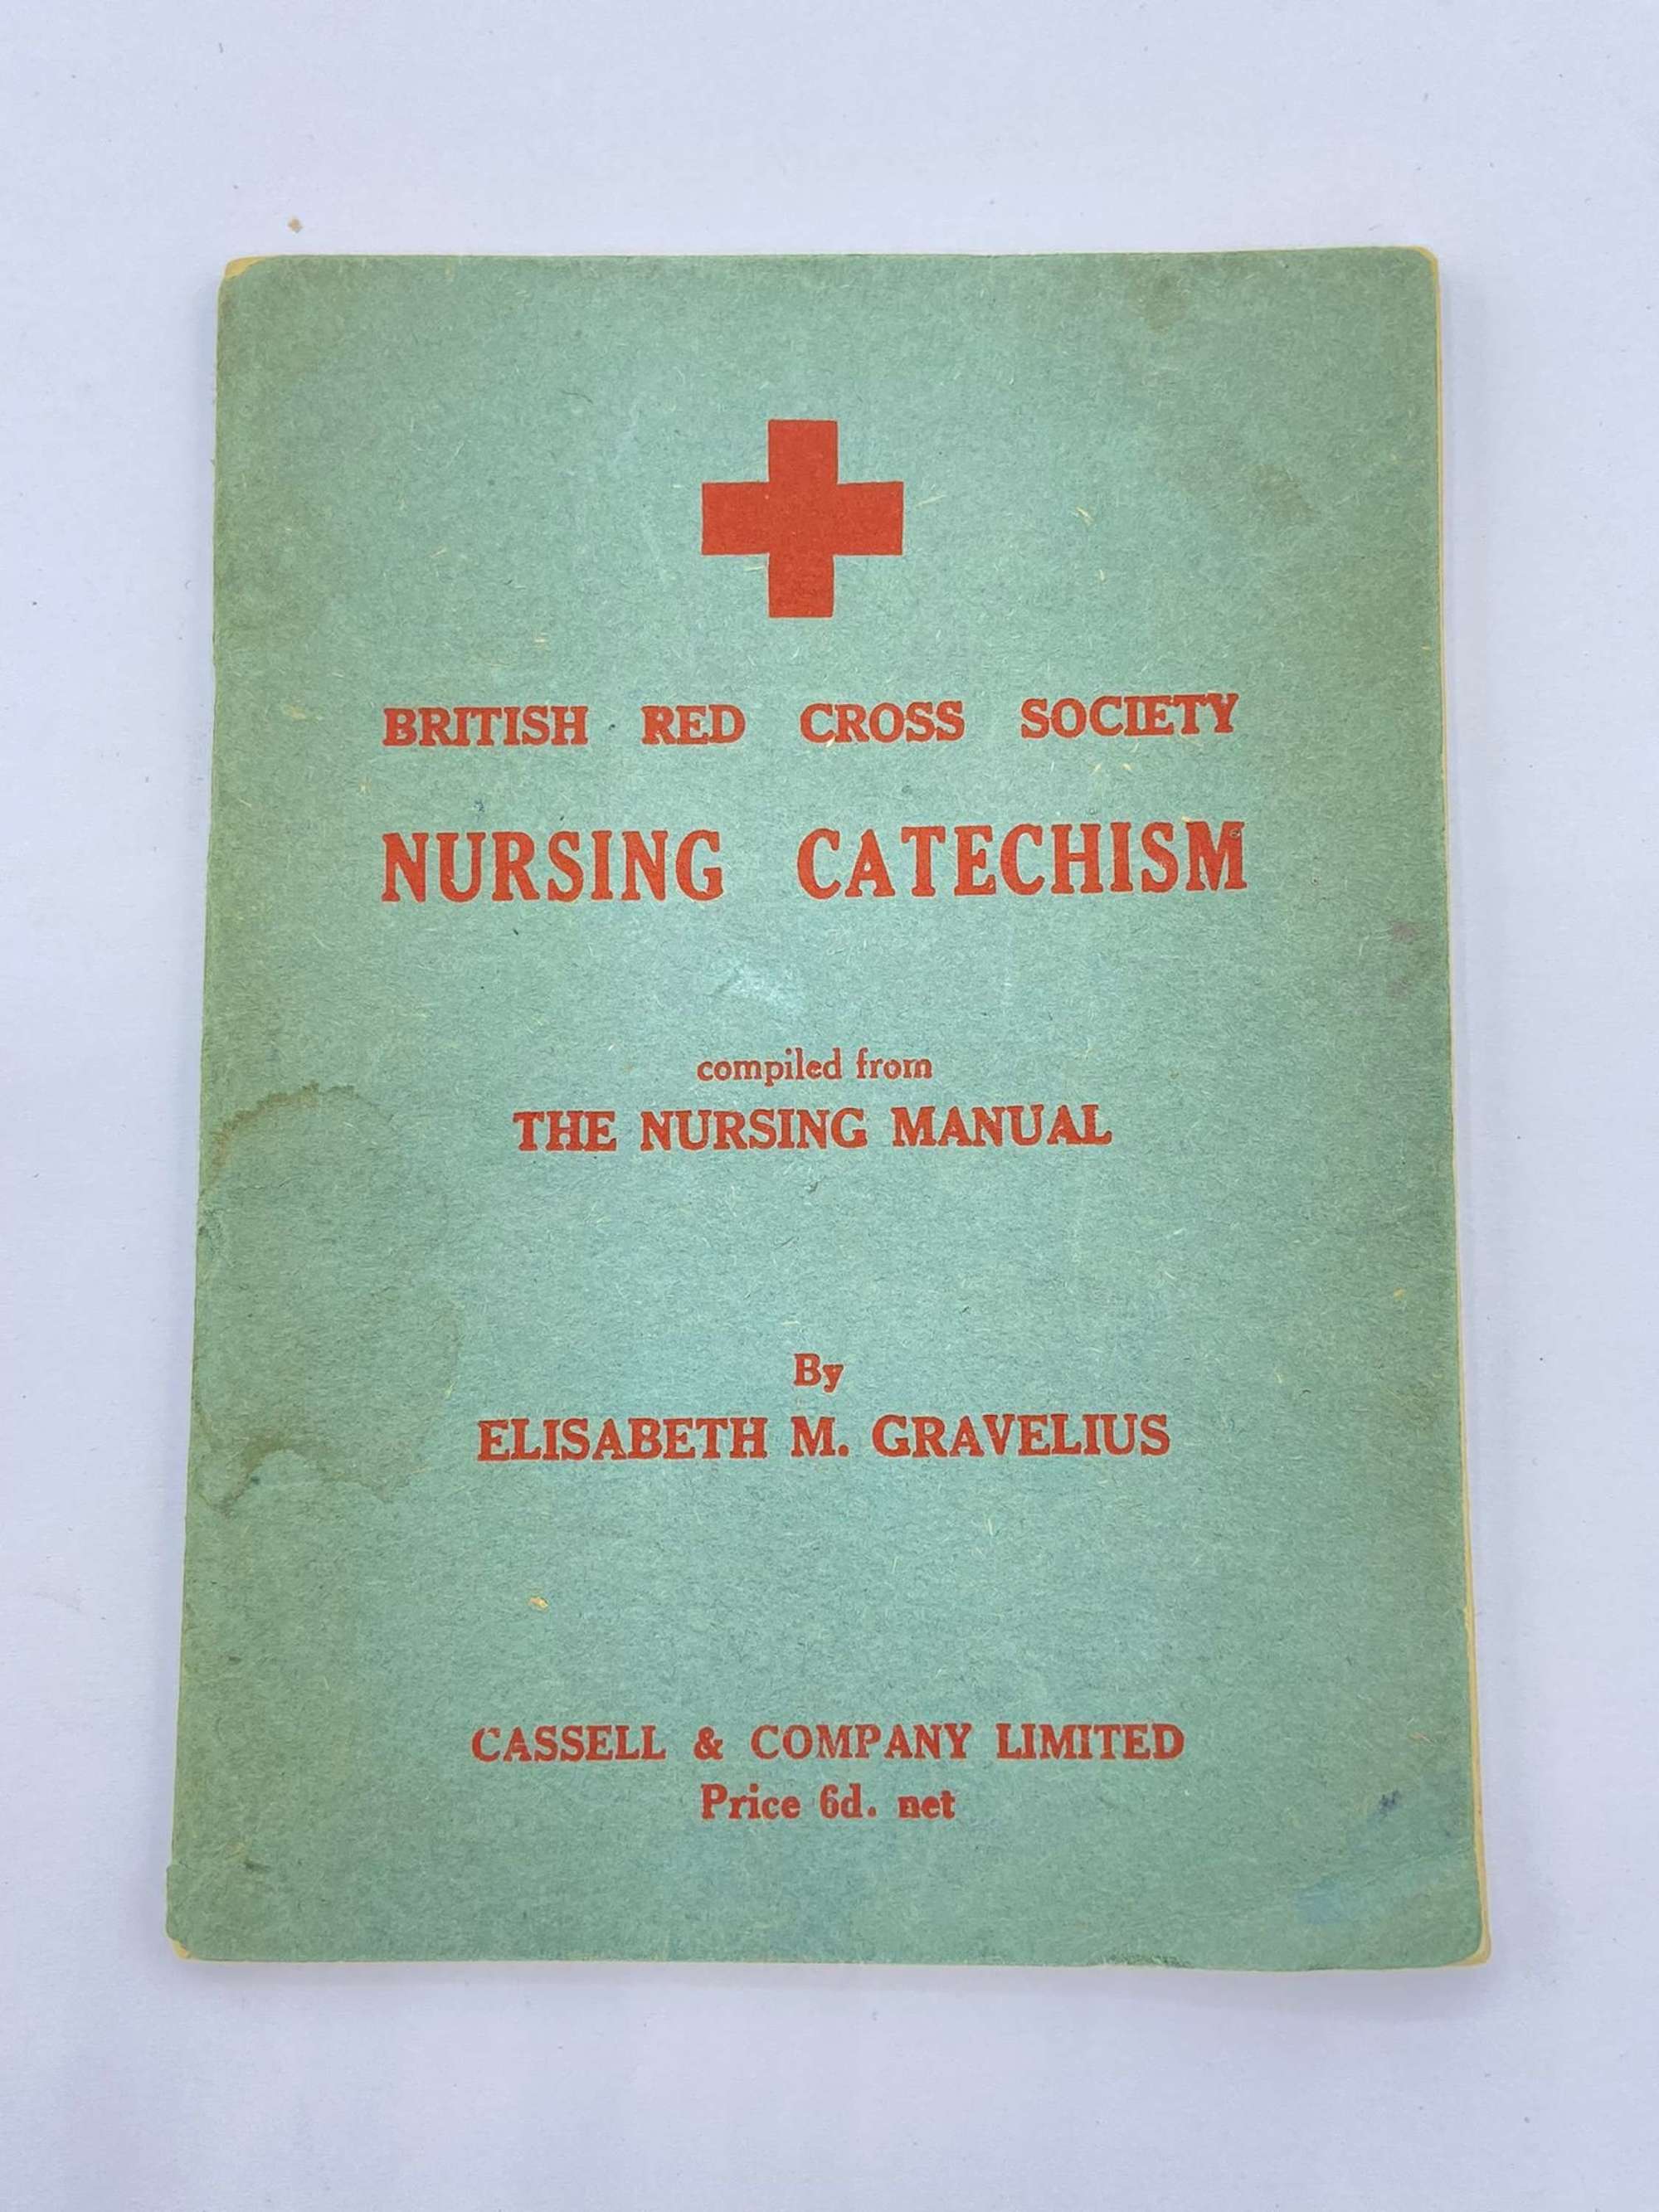 Post WW2 British Red Cross Society Nursing Catechism Manual